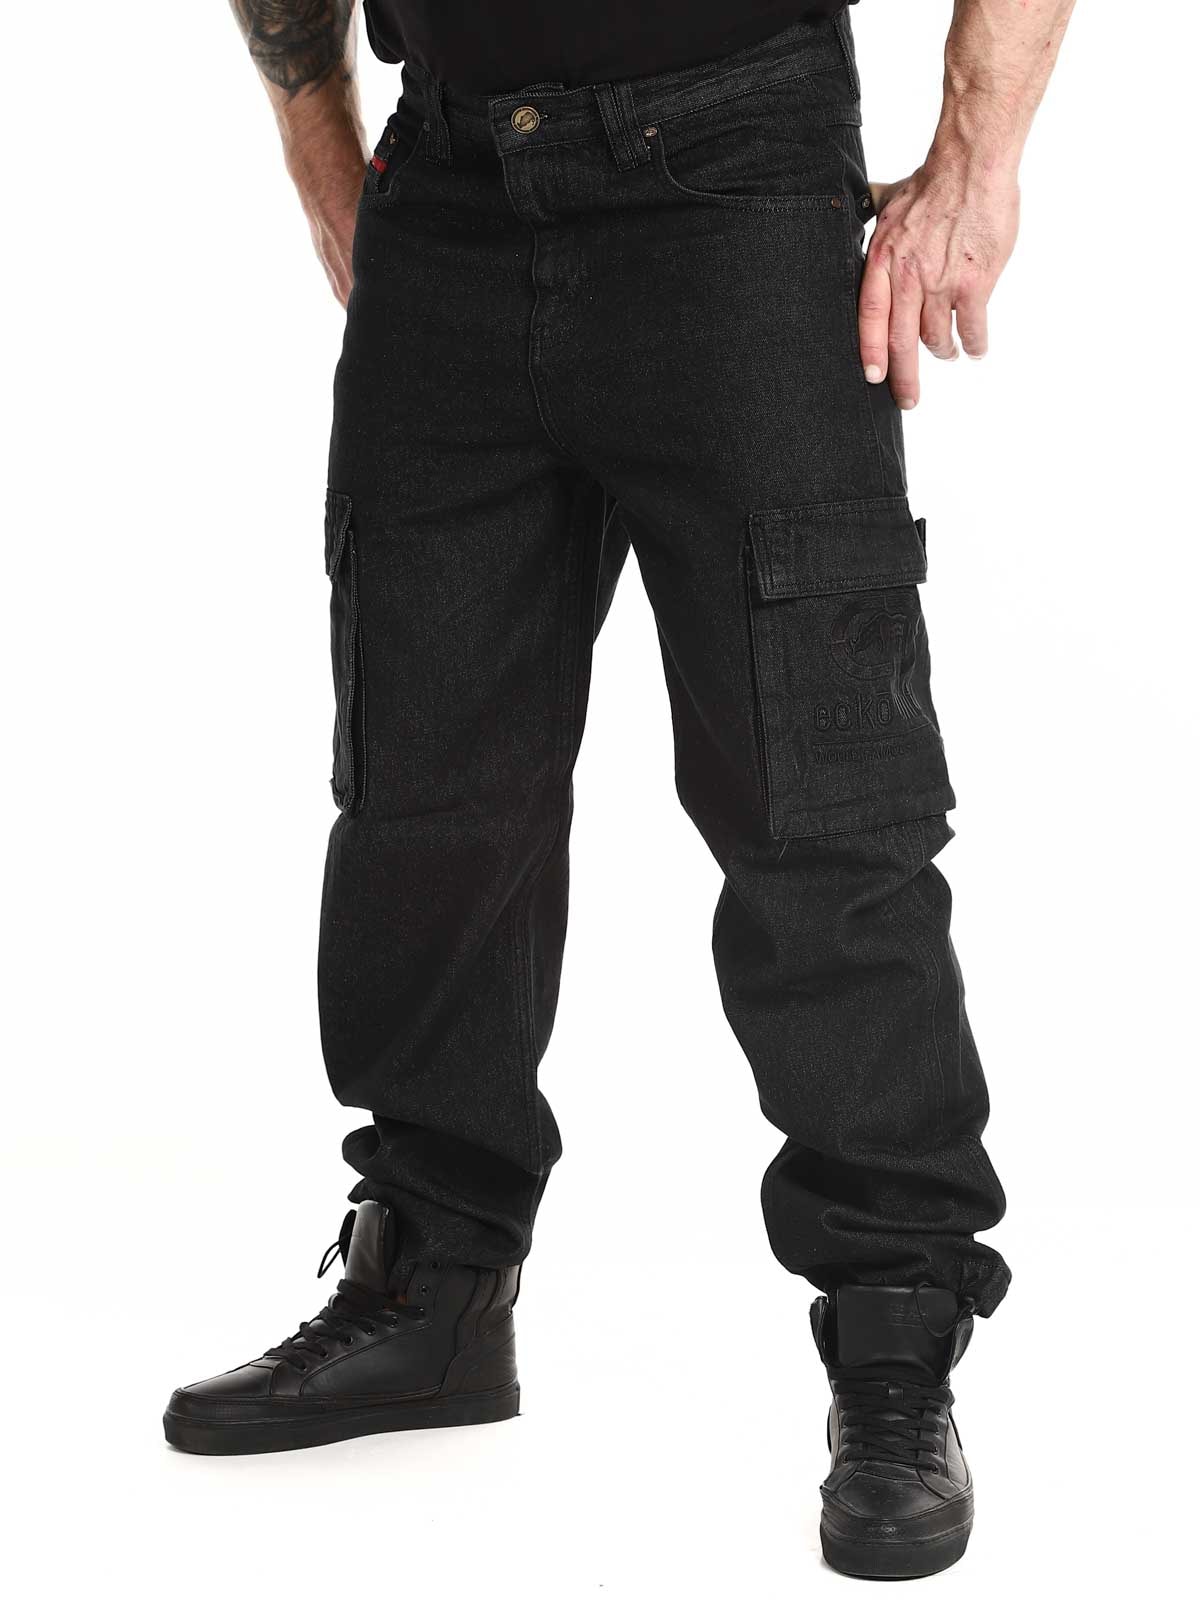 Ecko-unitd-jeans1.jpg